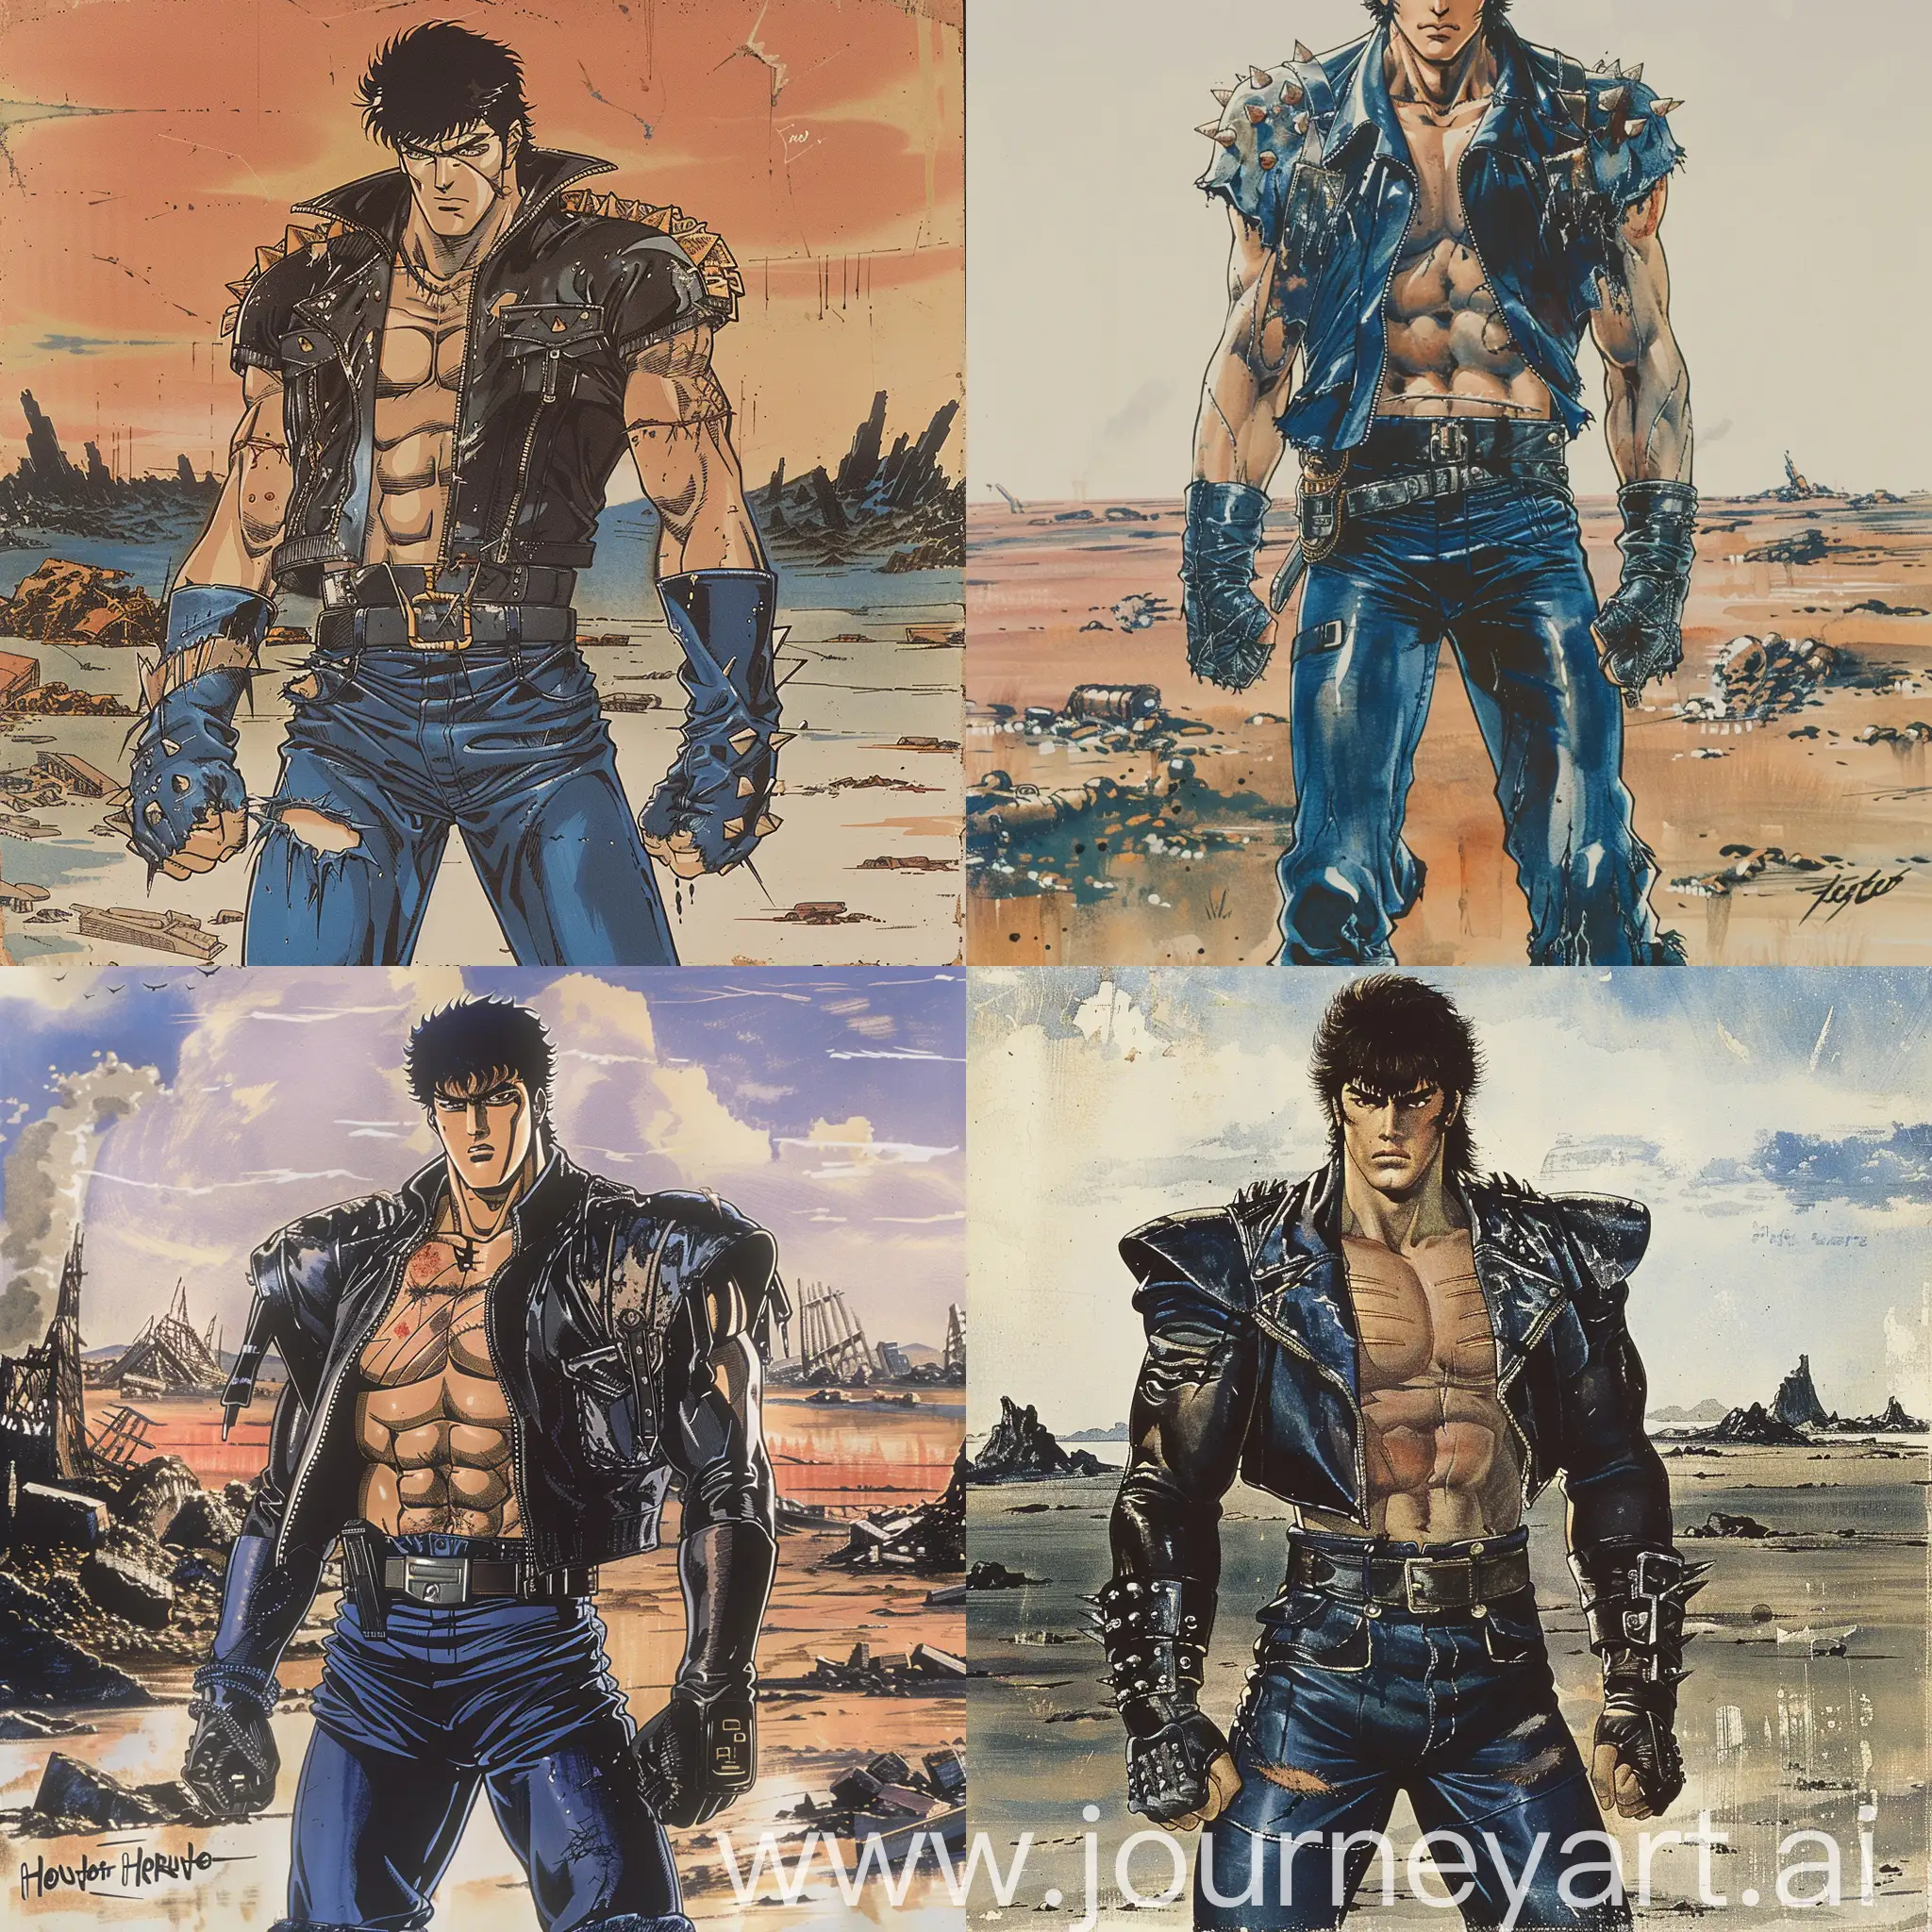 Muscular-Kenshiro-in-BlueBlack-Leather-Attire-Apocalyptic-80s-Anime-Still-4K